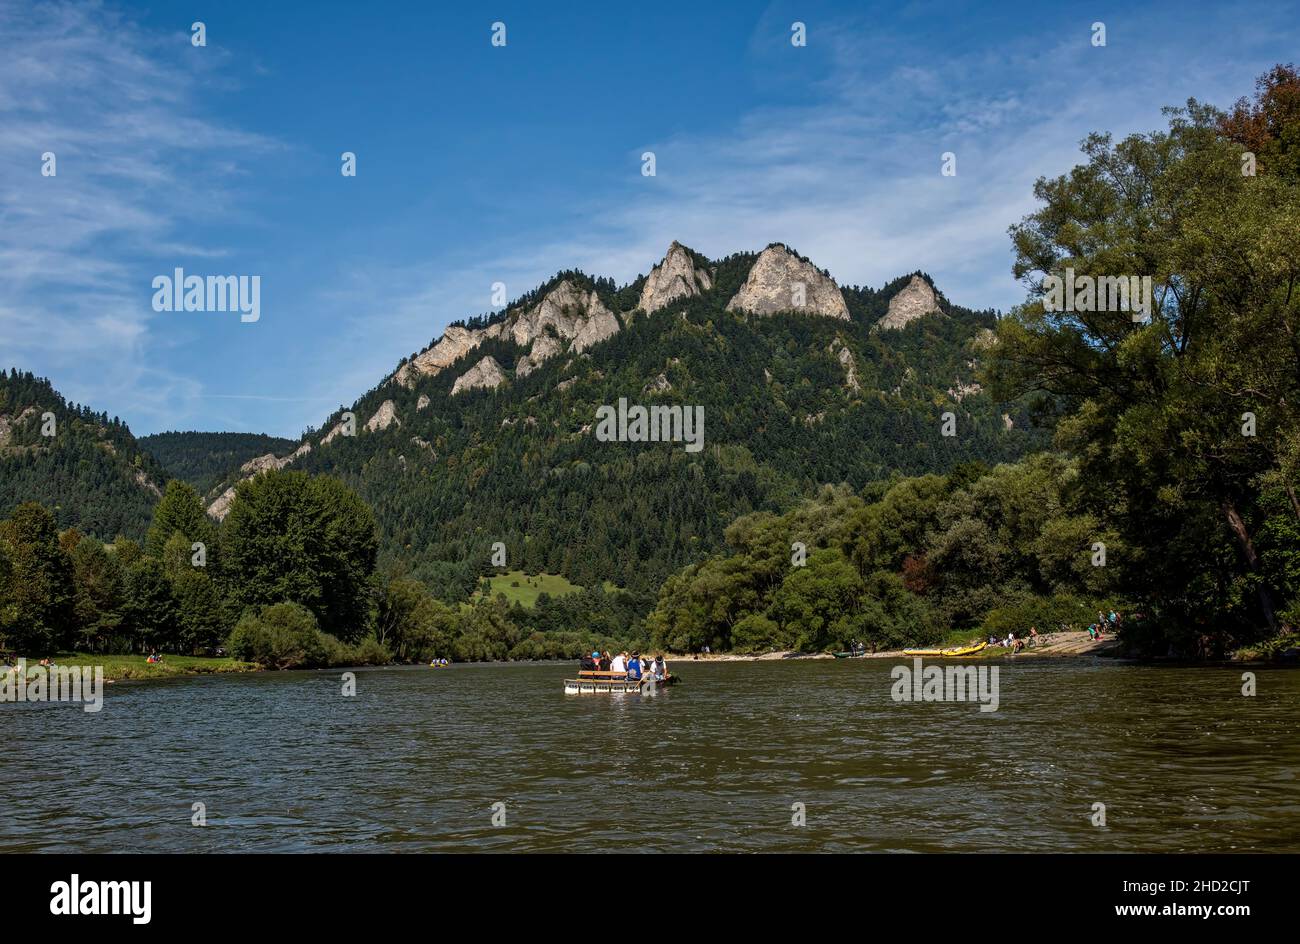 Rafting on Dunajec Border River in Pieniny in Poland and Slovakia with view at Trzy Korony Mountain Stock Photo